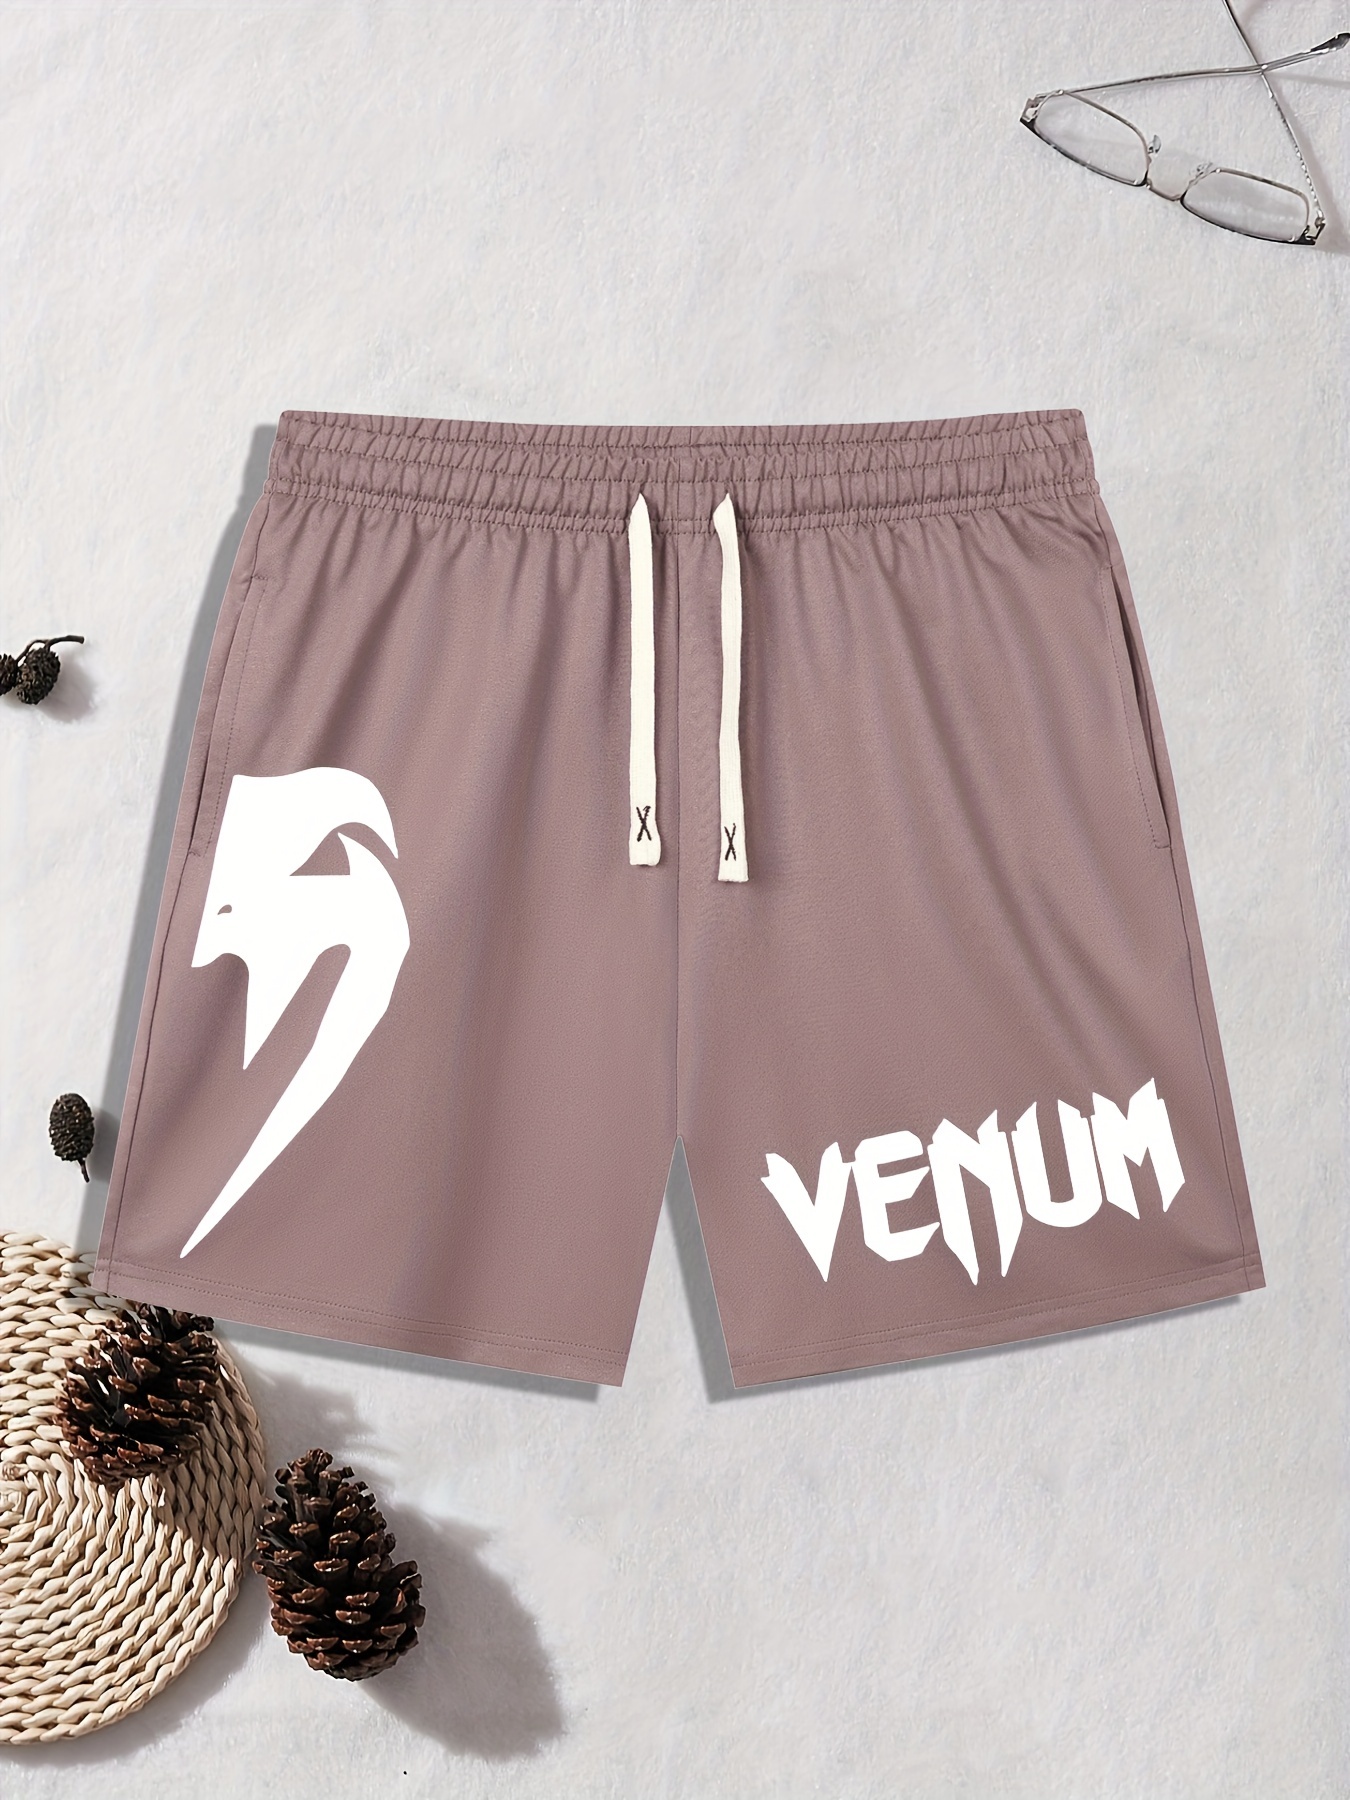 Venum Athletic Shorts for Men